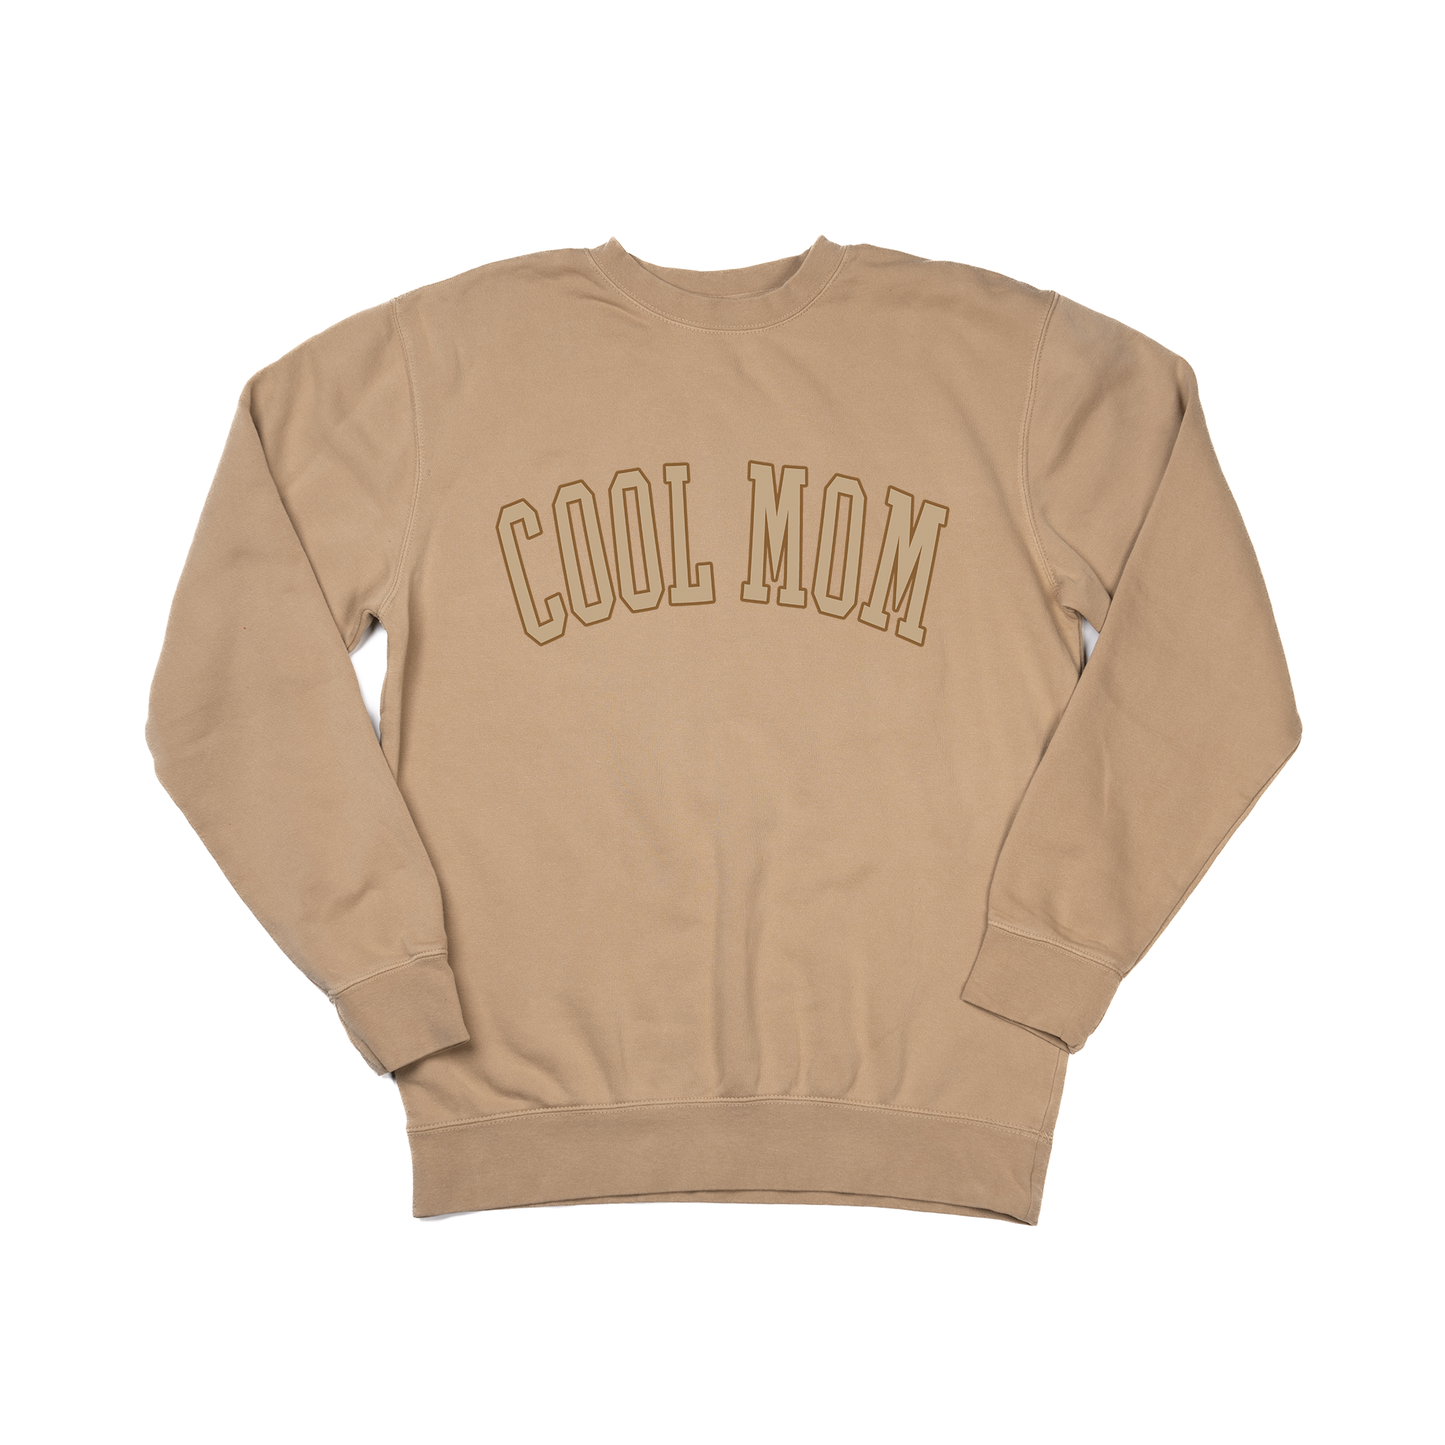 Cool Mom (Tan Varsity) - Sweatshirt (Tan)